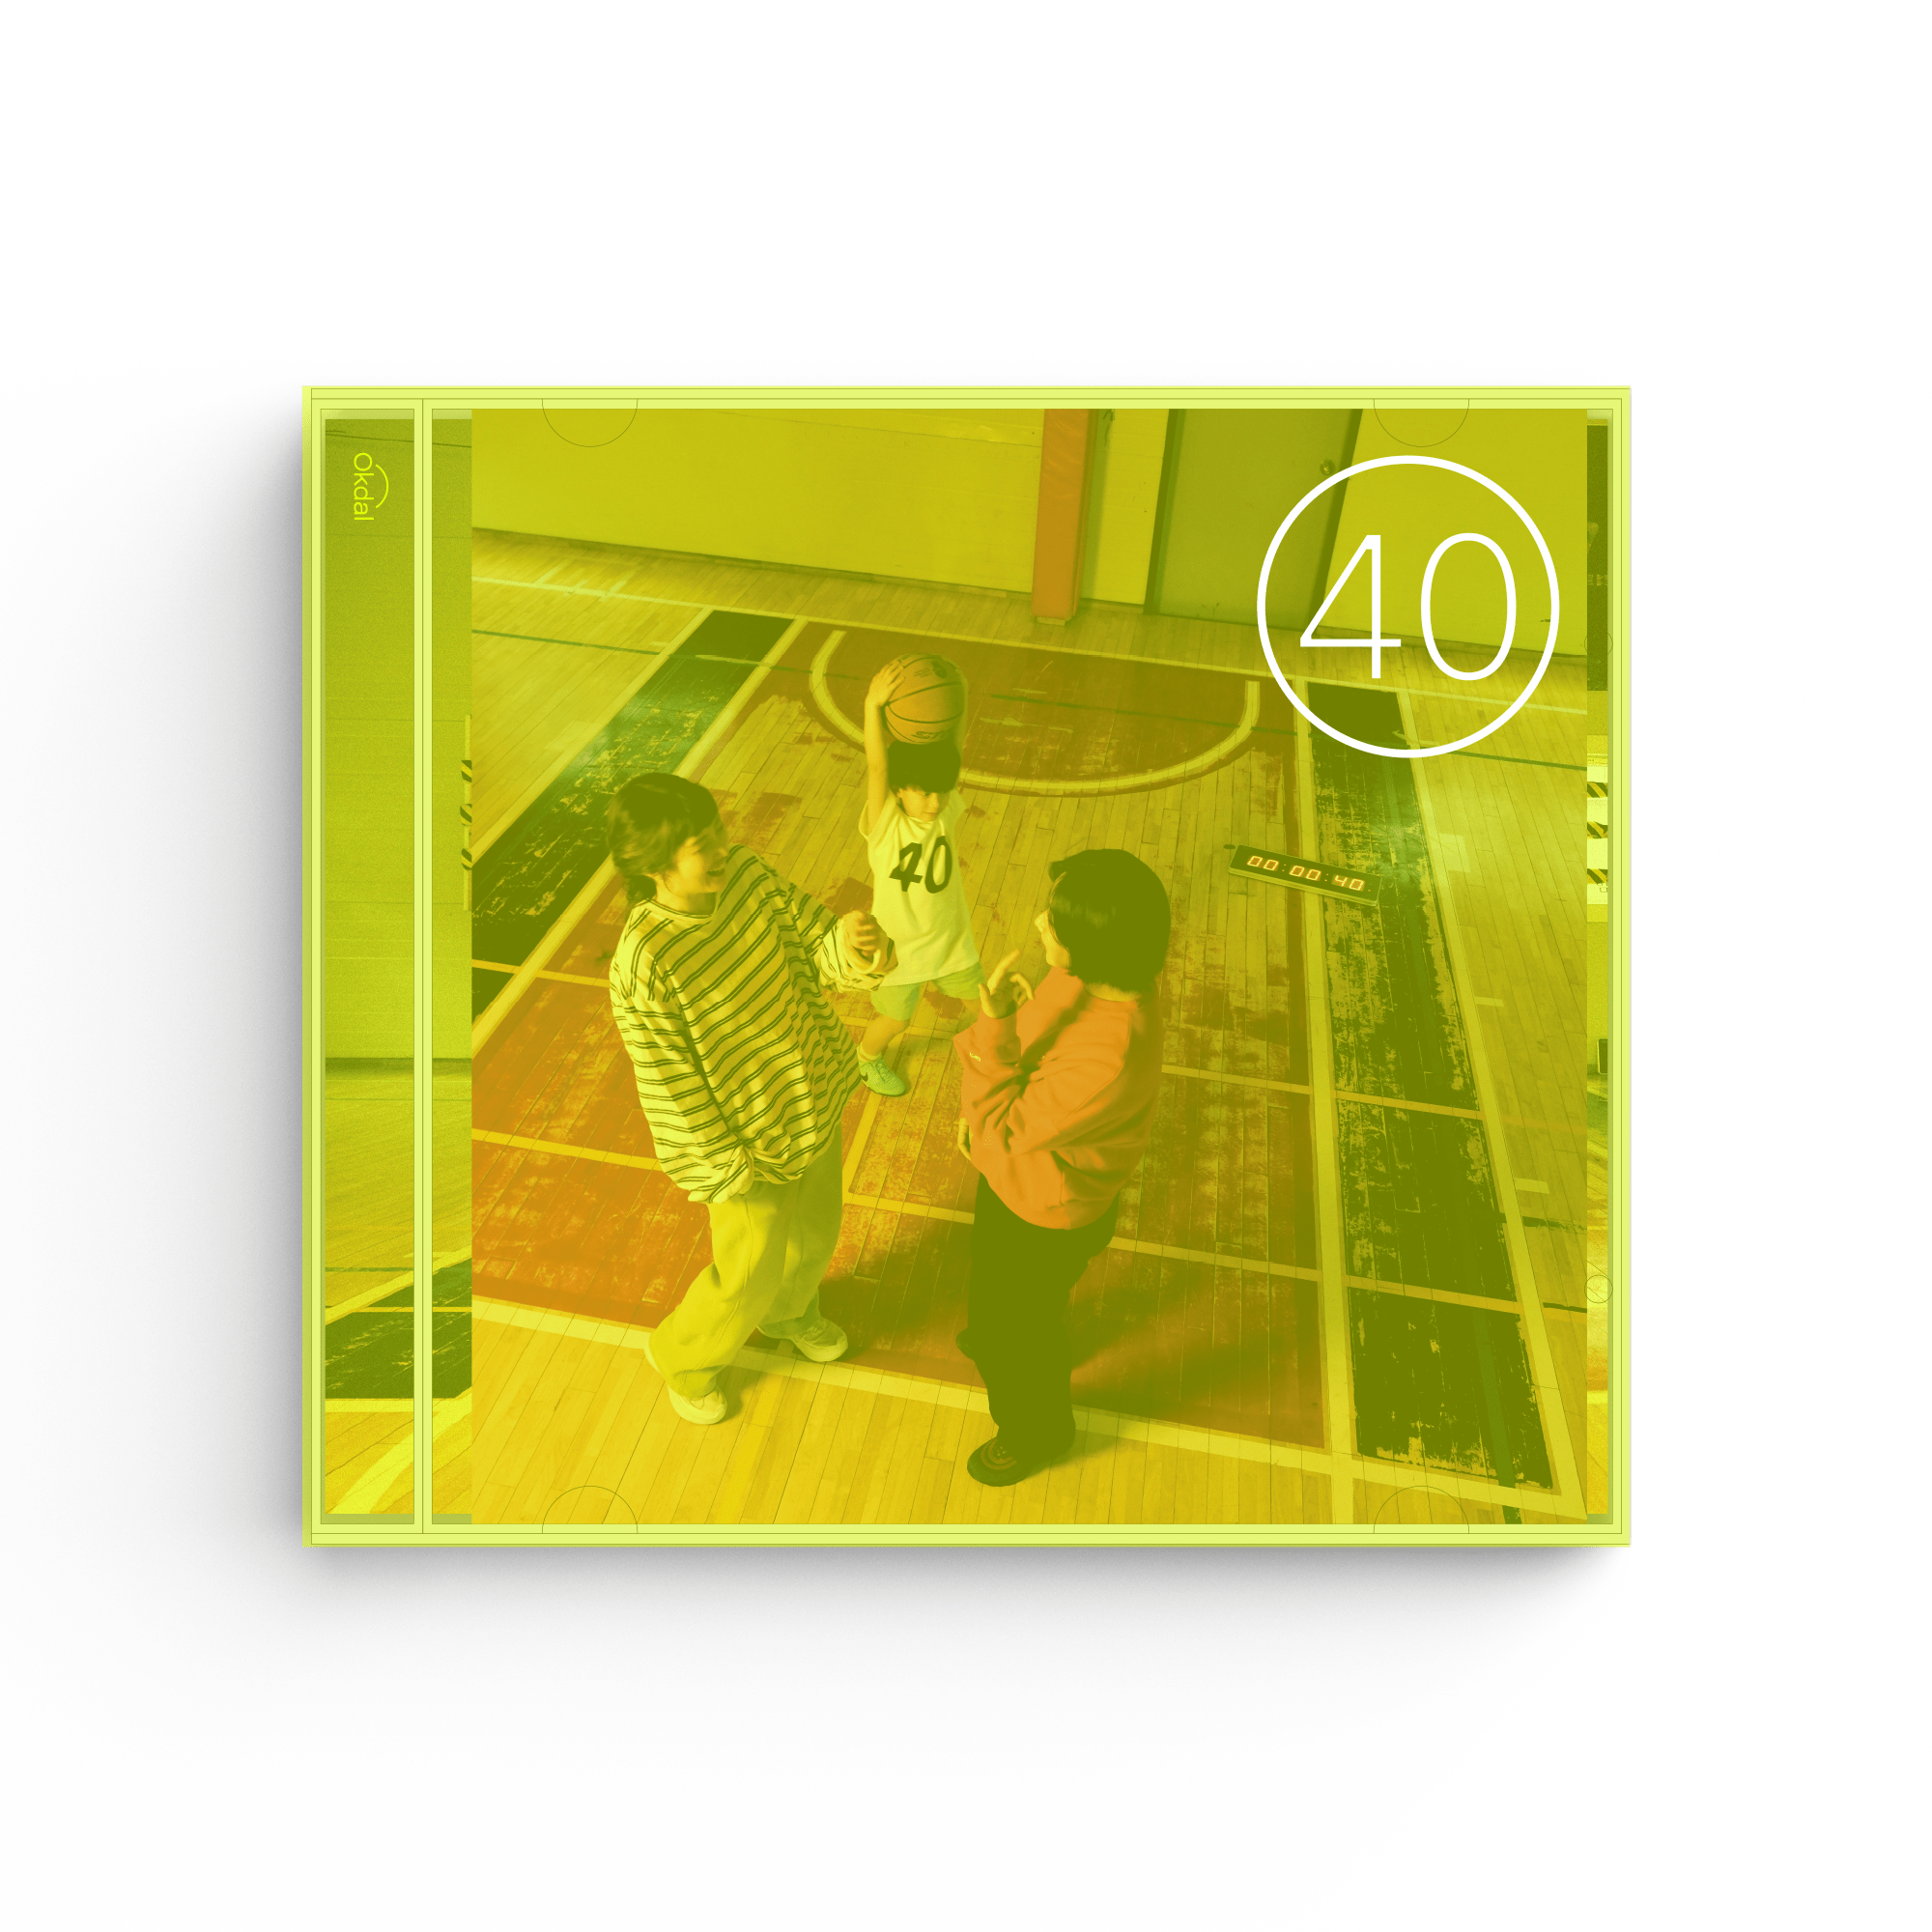 OKDAL - 3RD ALBUM [40] - KPOPHERO